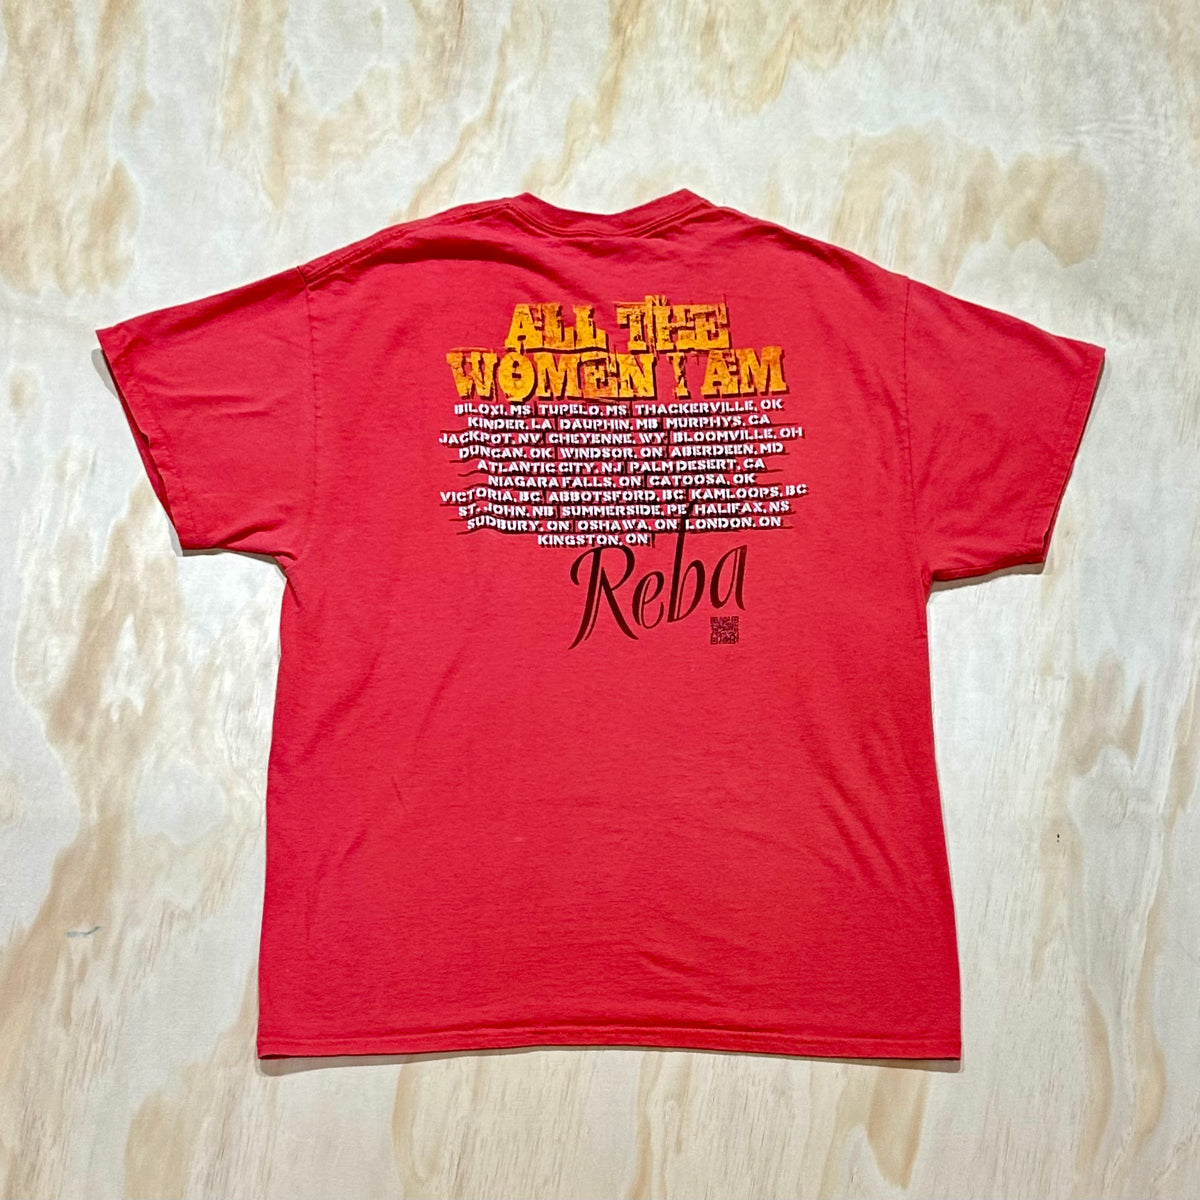 2010 Reba Mcentire "ALL THE WOMEN I AM" tour shirt